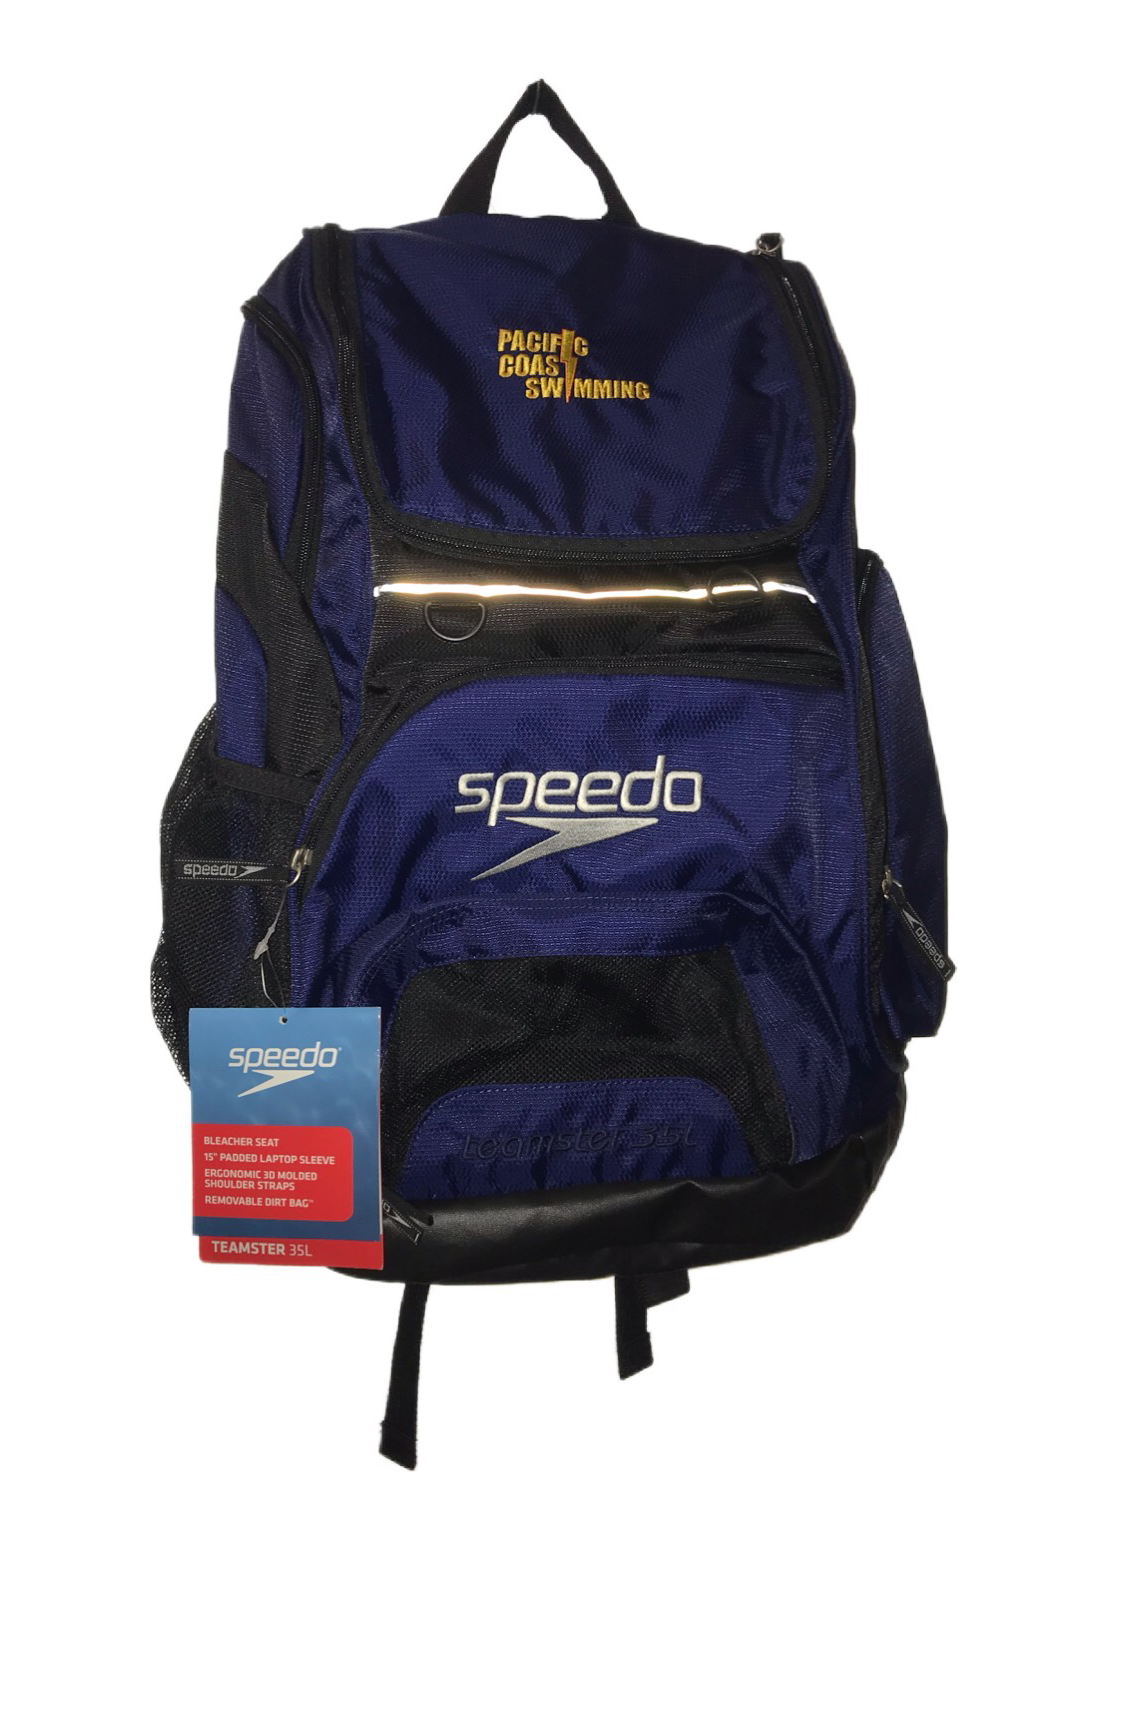 Speedo Backpack 